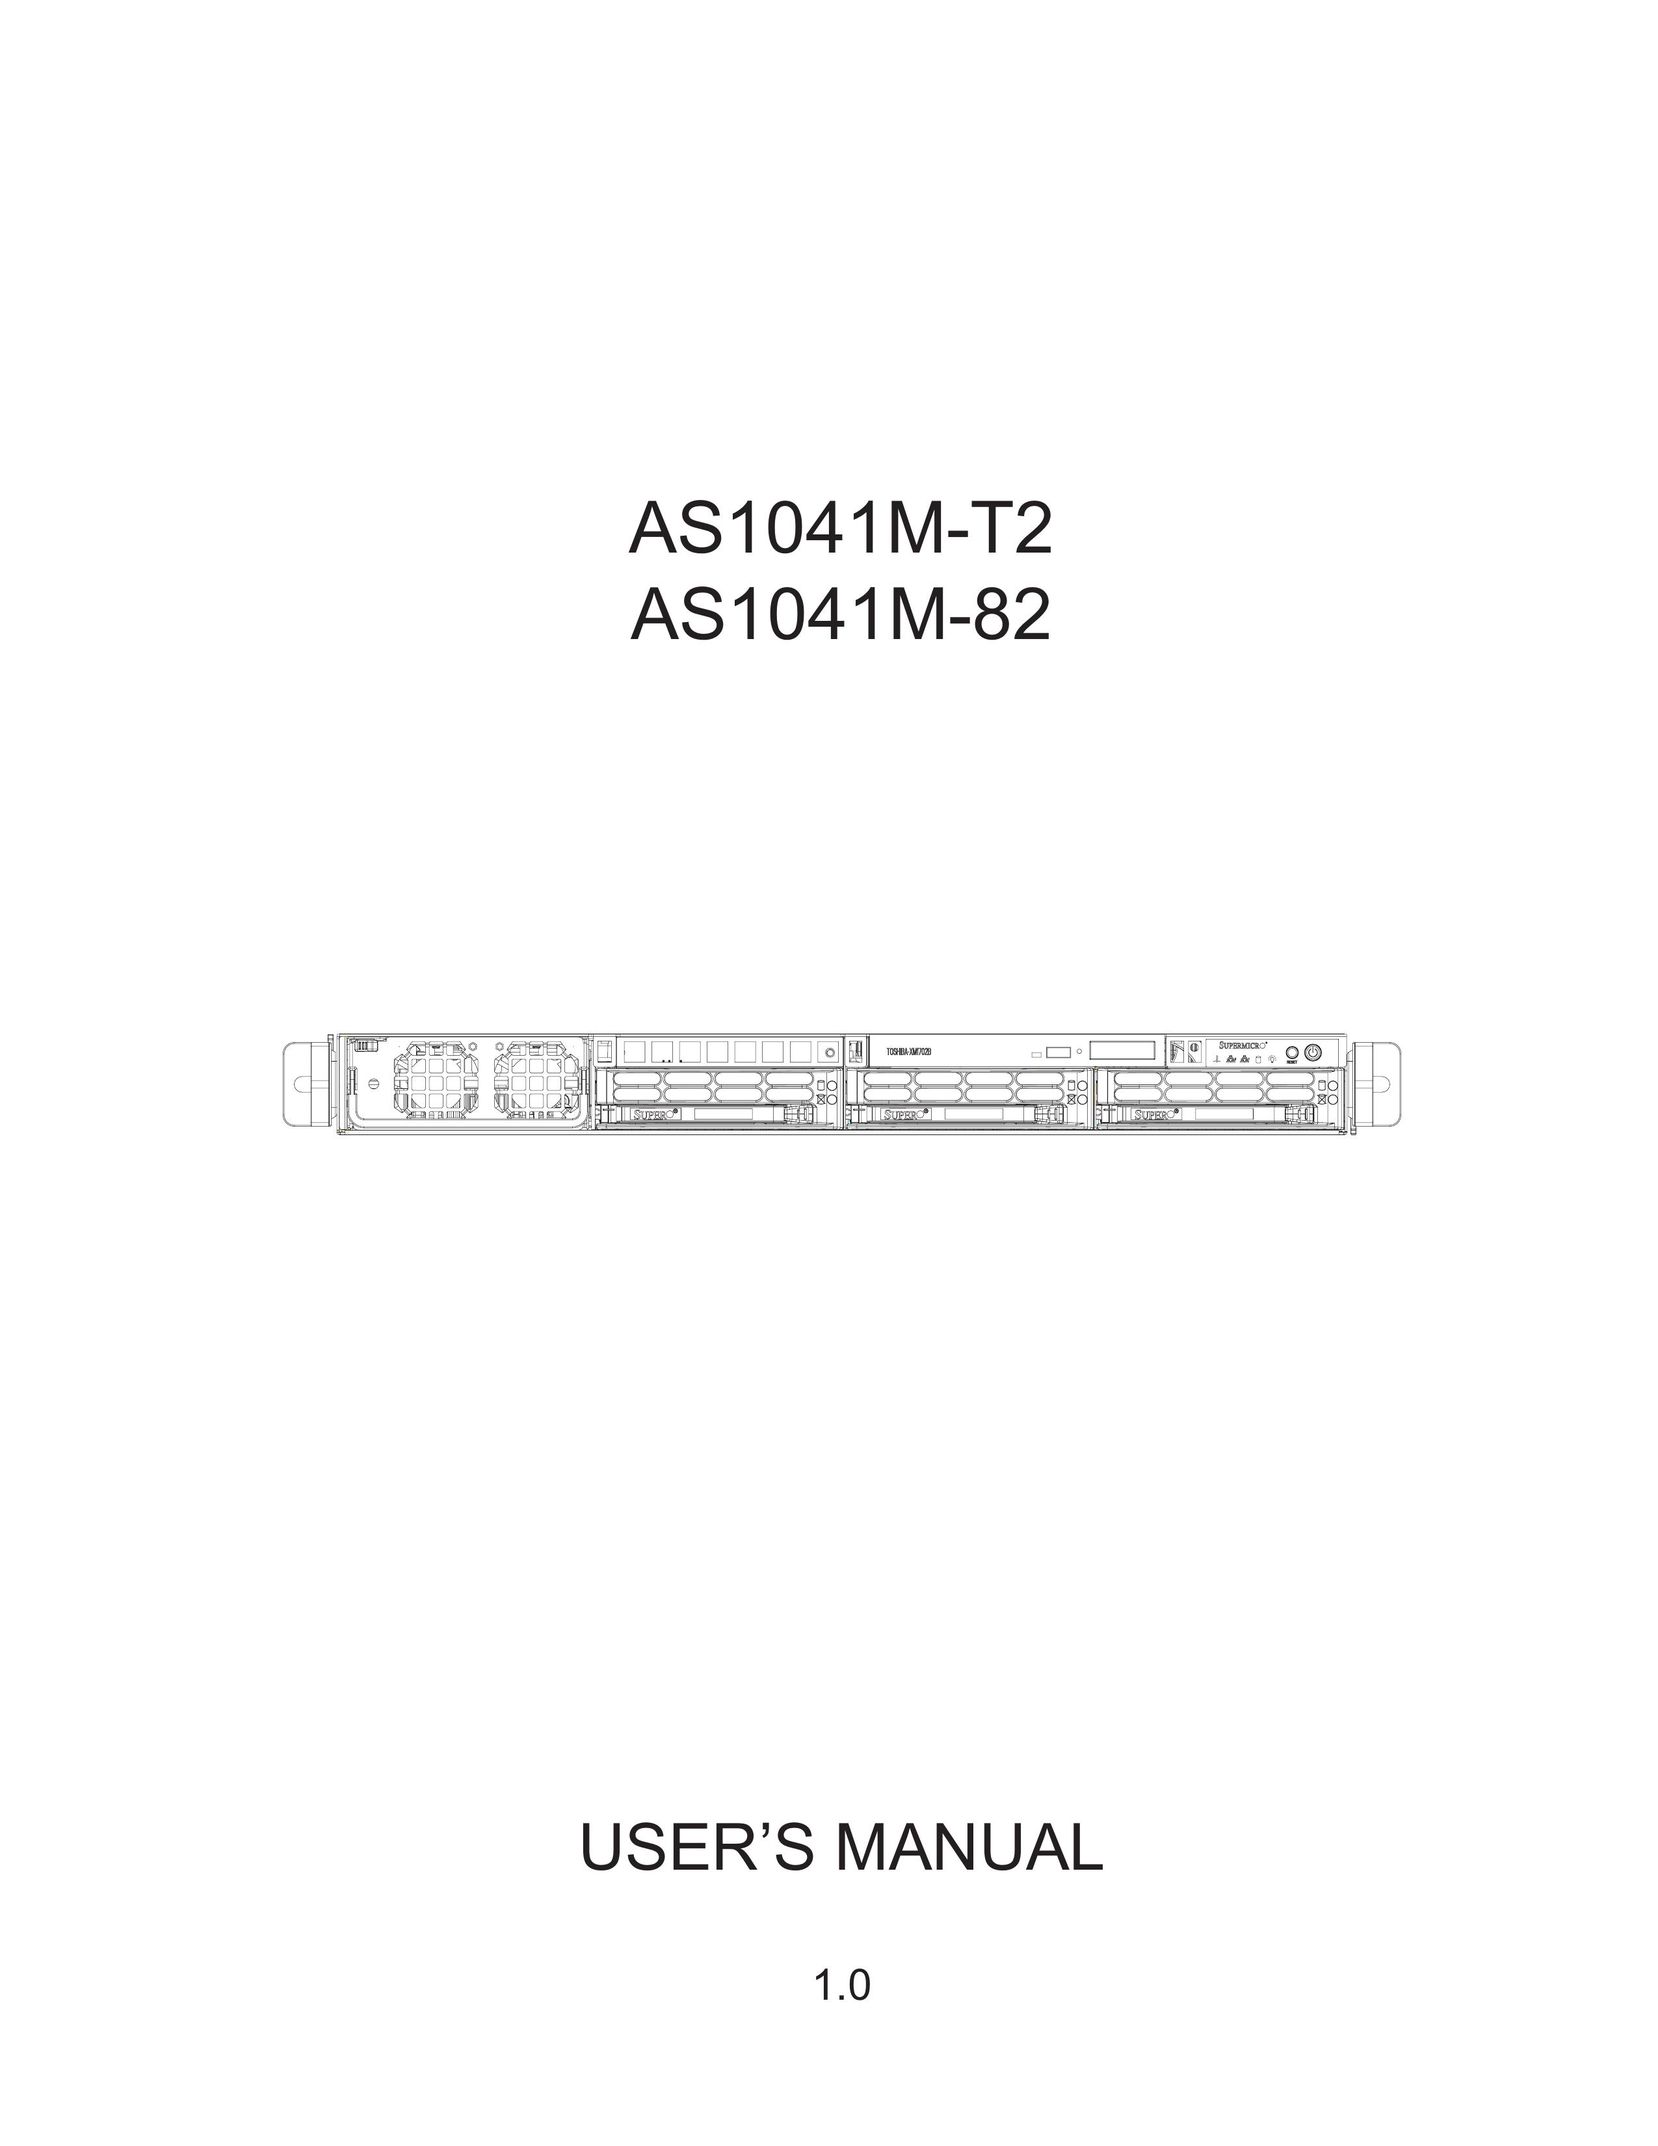 SUPER MICRO Computer AS1041M-82 Server User Manual